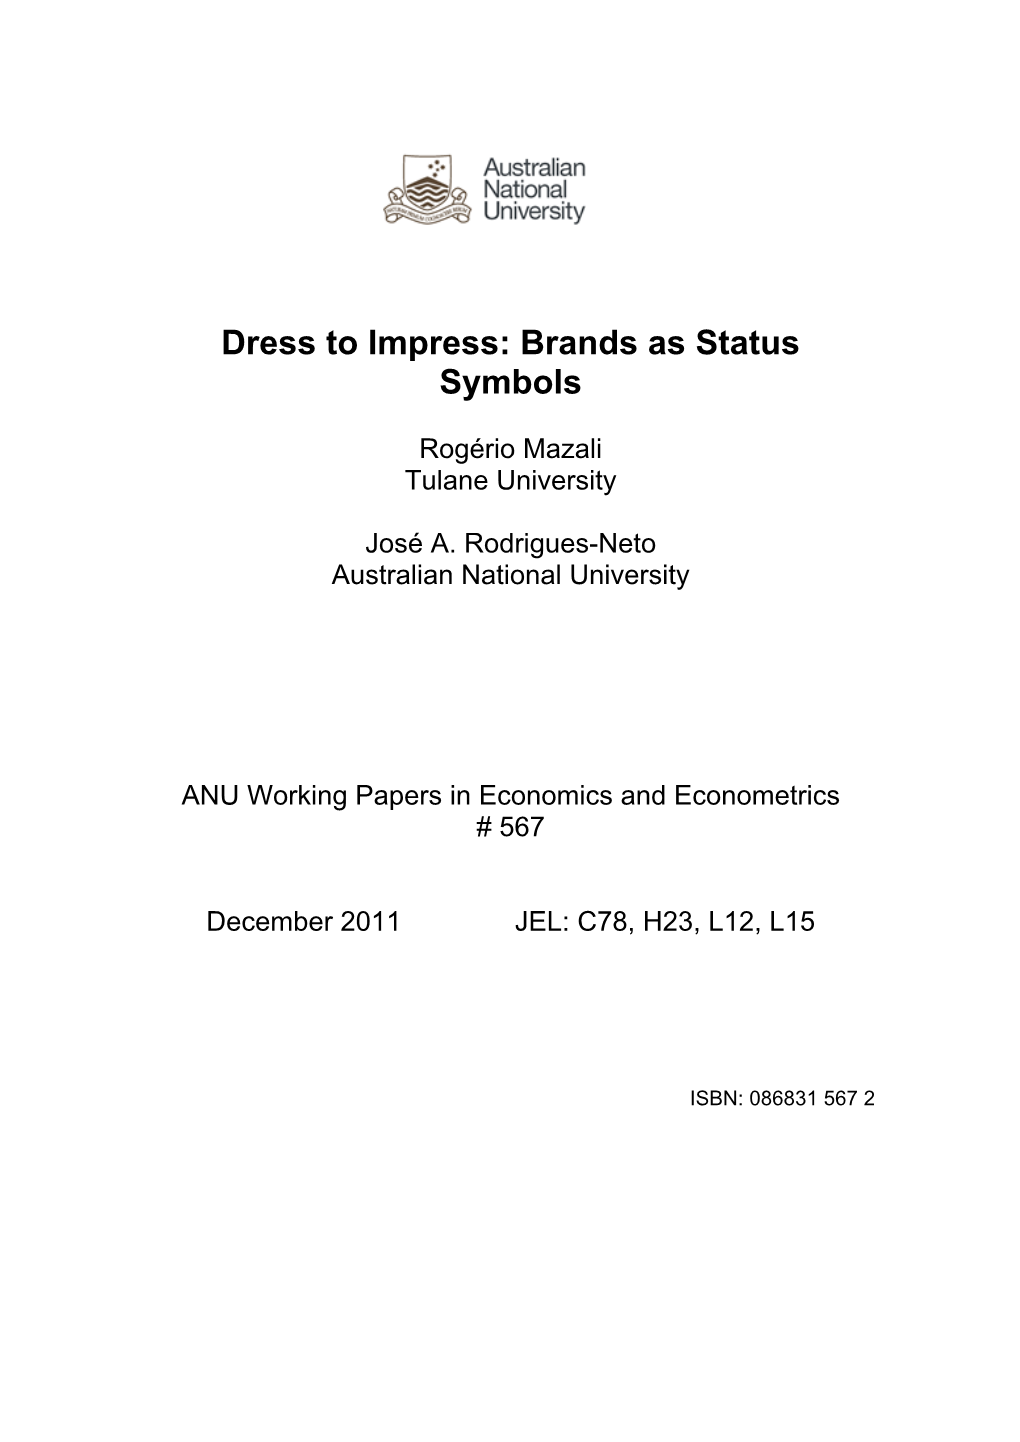 Dress to Impress: Brands As Status Symbols